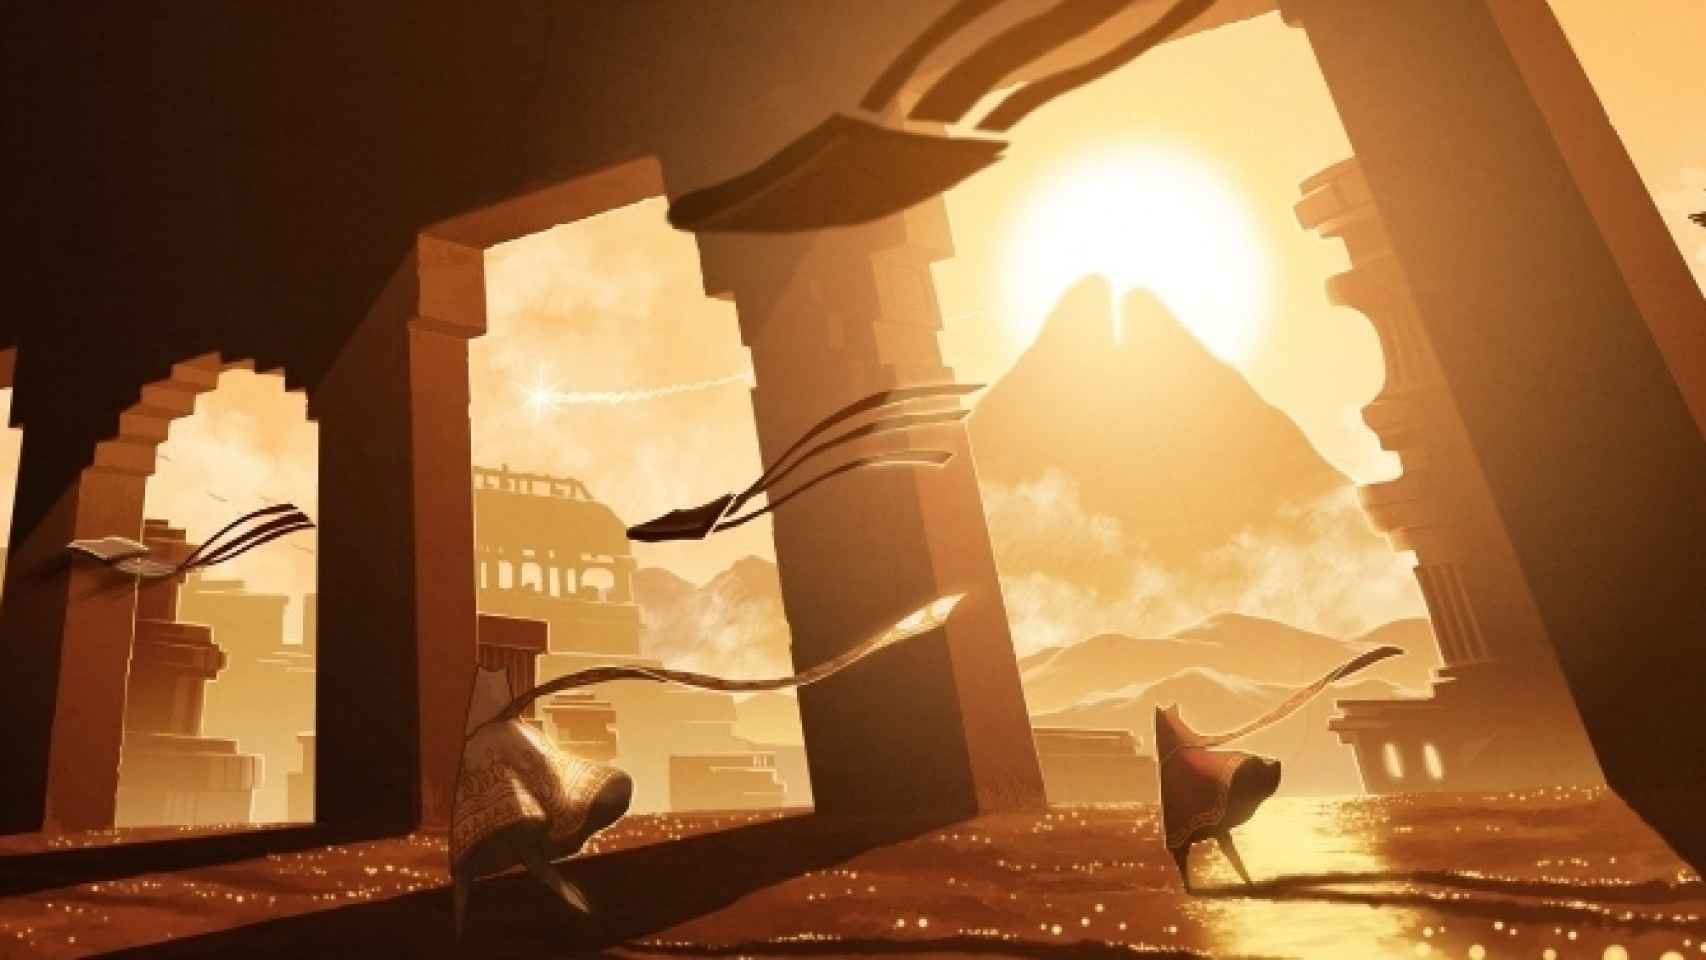 Imagen del videojuego 'Journey'